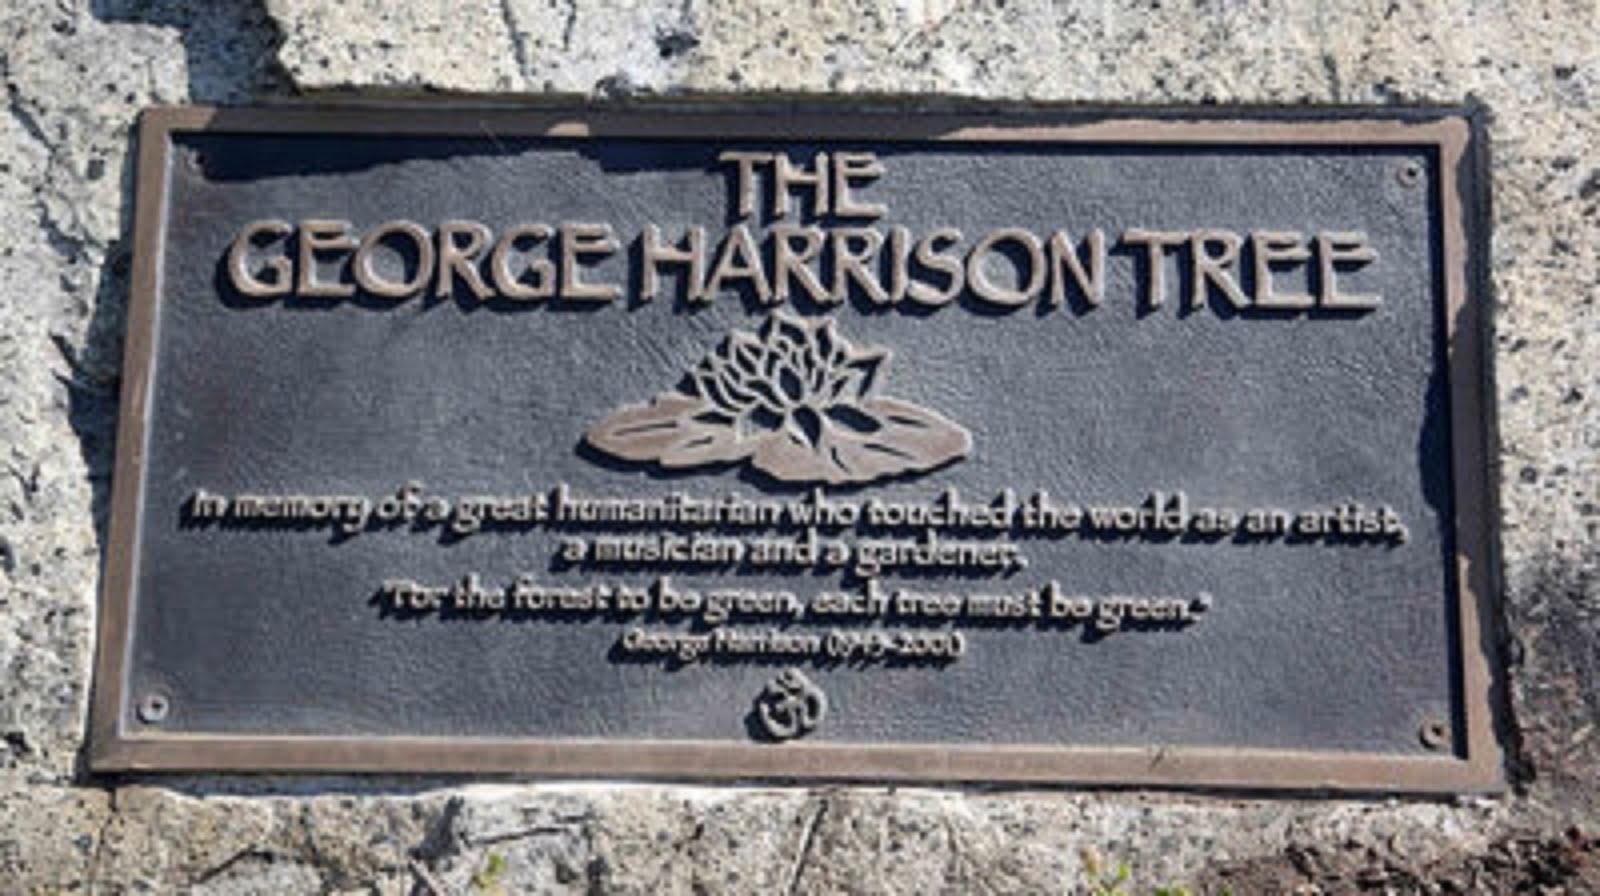 THE GEORGE HARRISON TREE